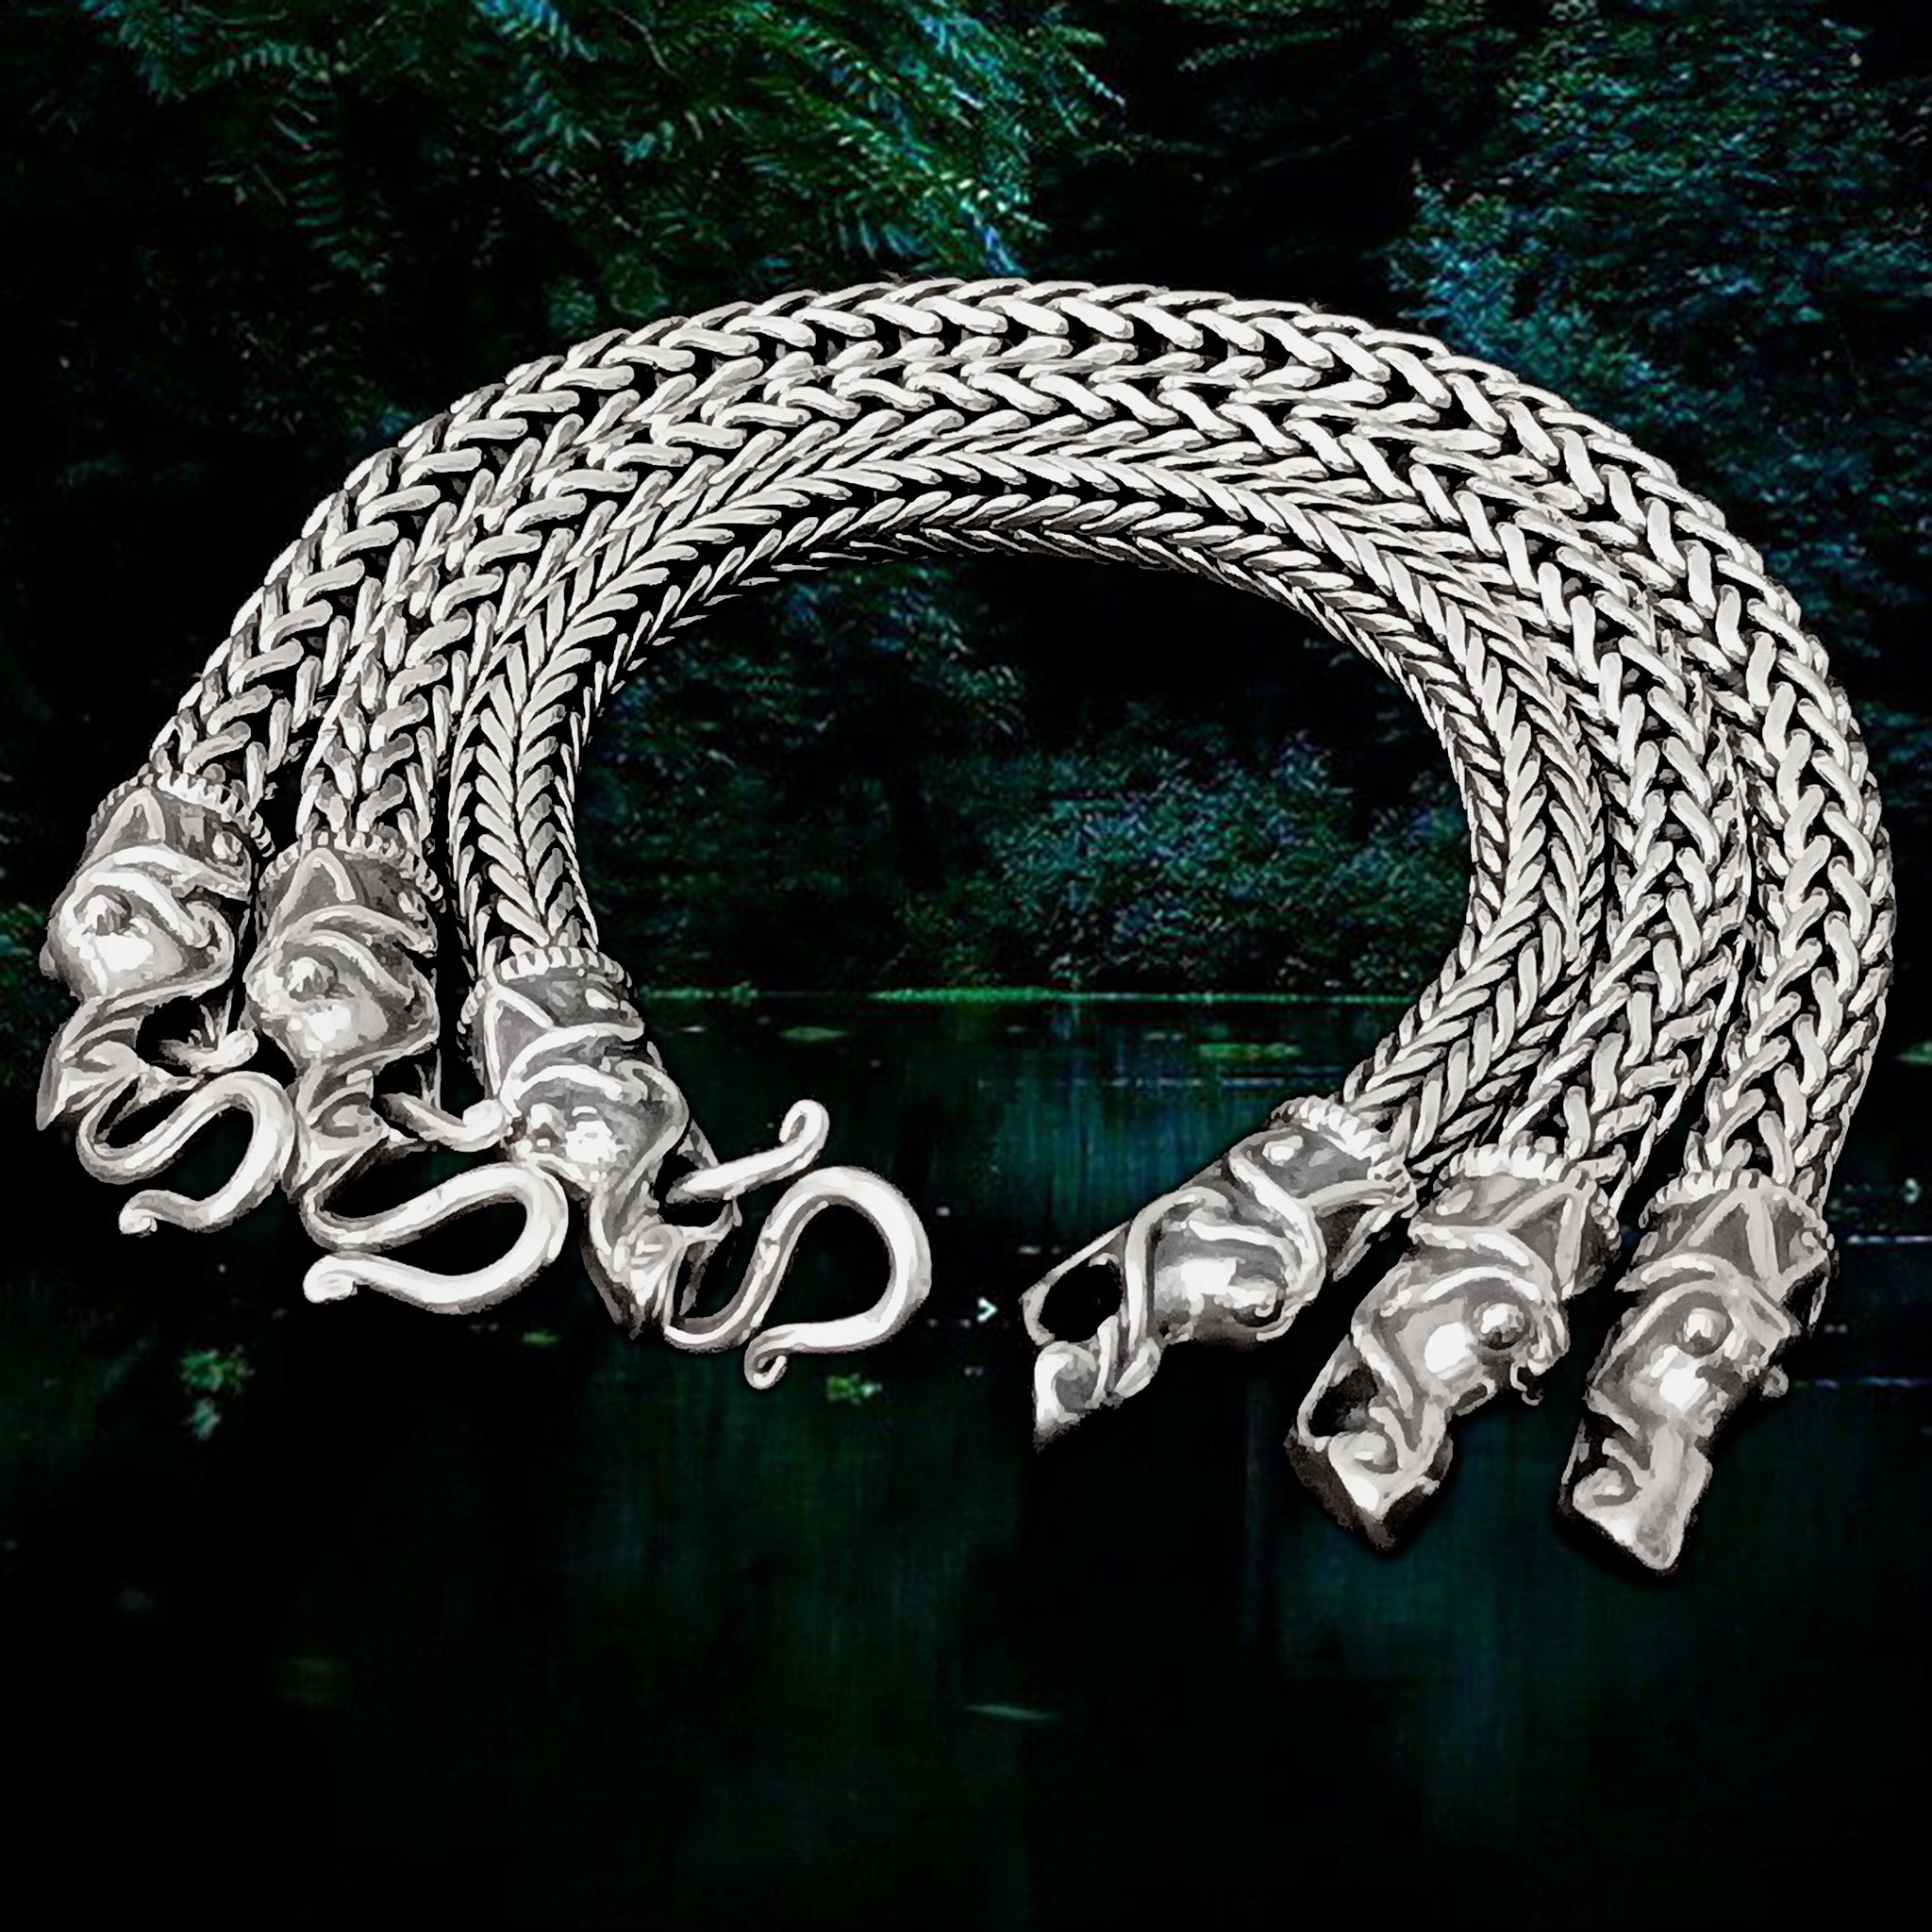 8mm Silver Snake Bracelets With Gotlandic Dragon Headsn - Silver Viking Jewelry